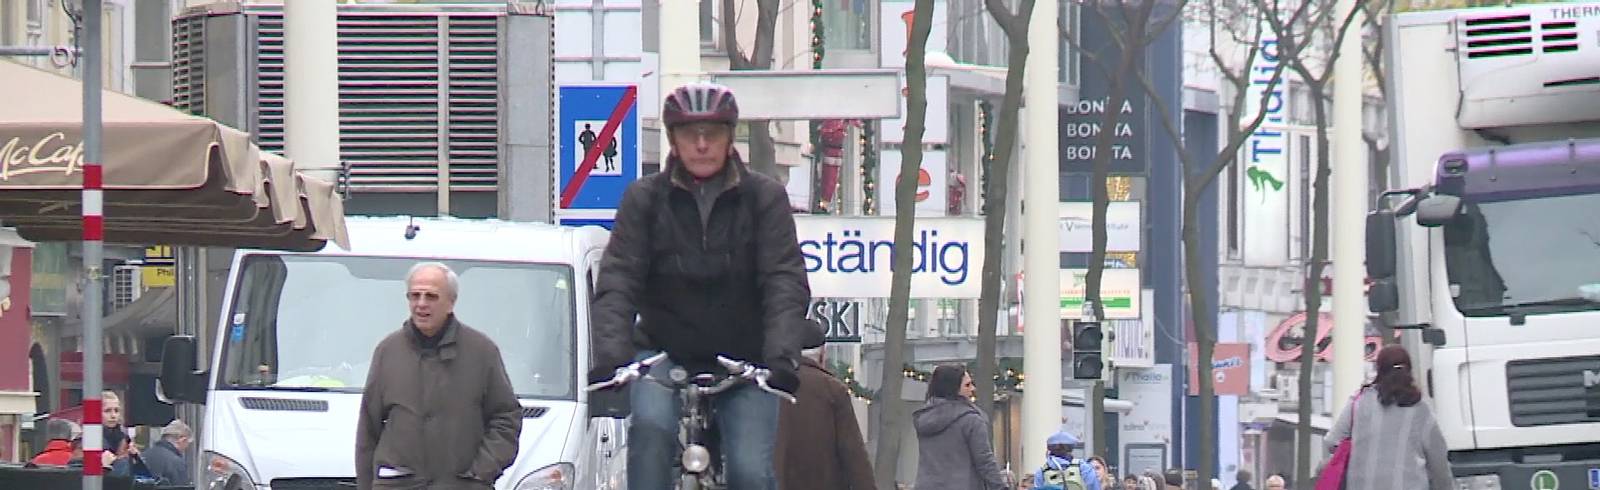 Verkehr: Immer mehr Winterradler